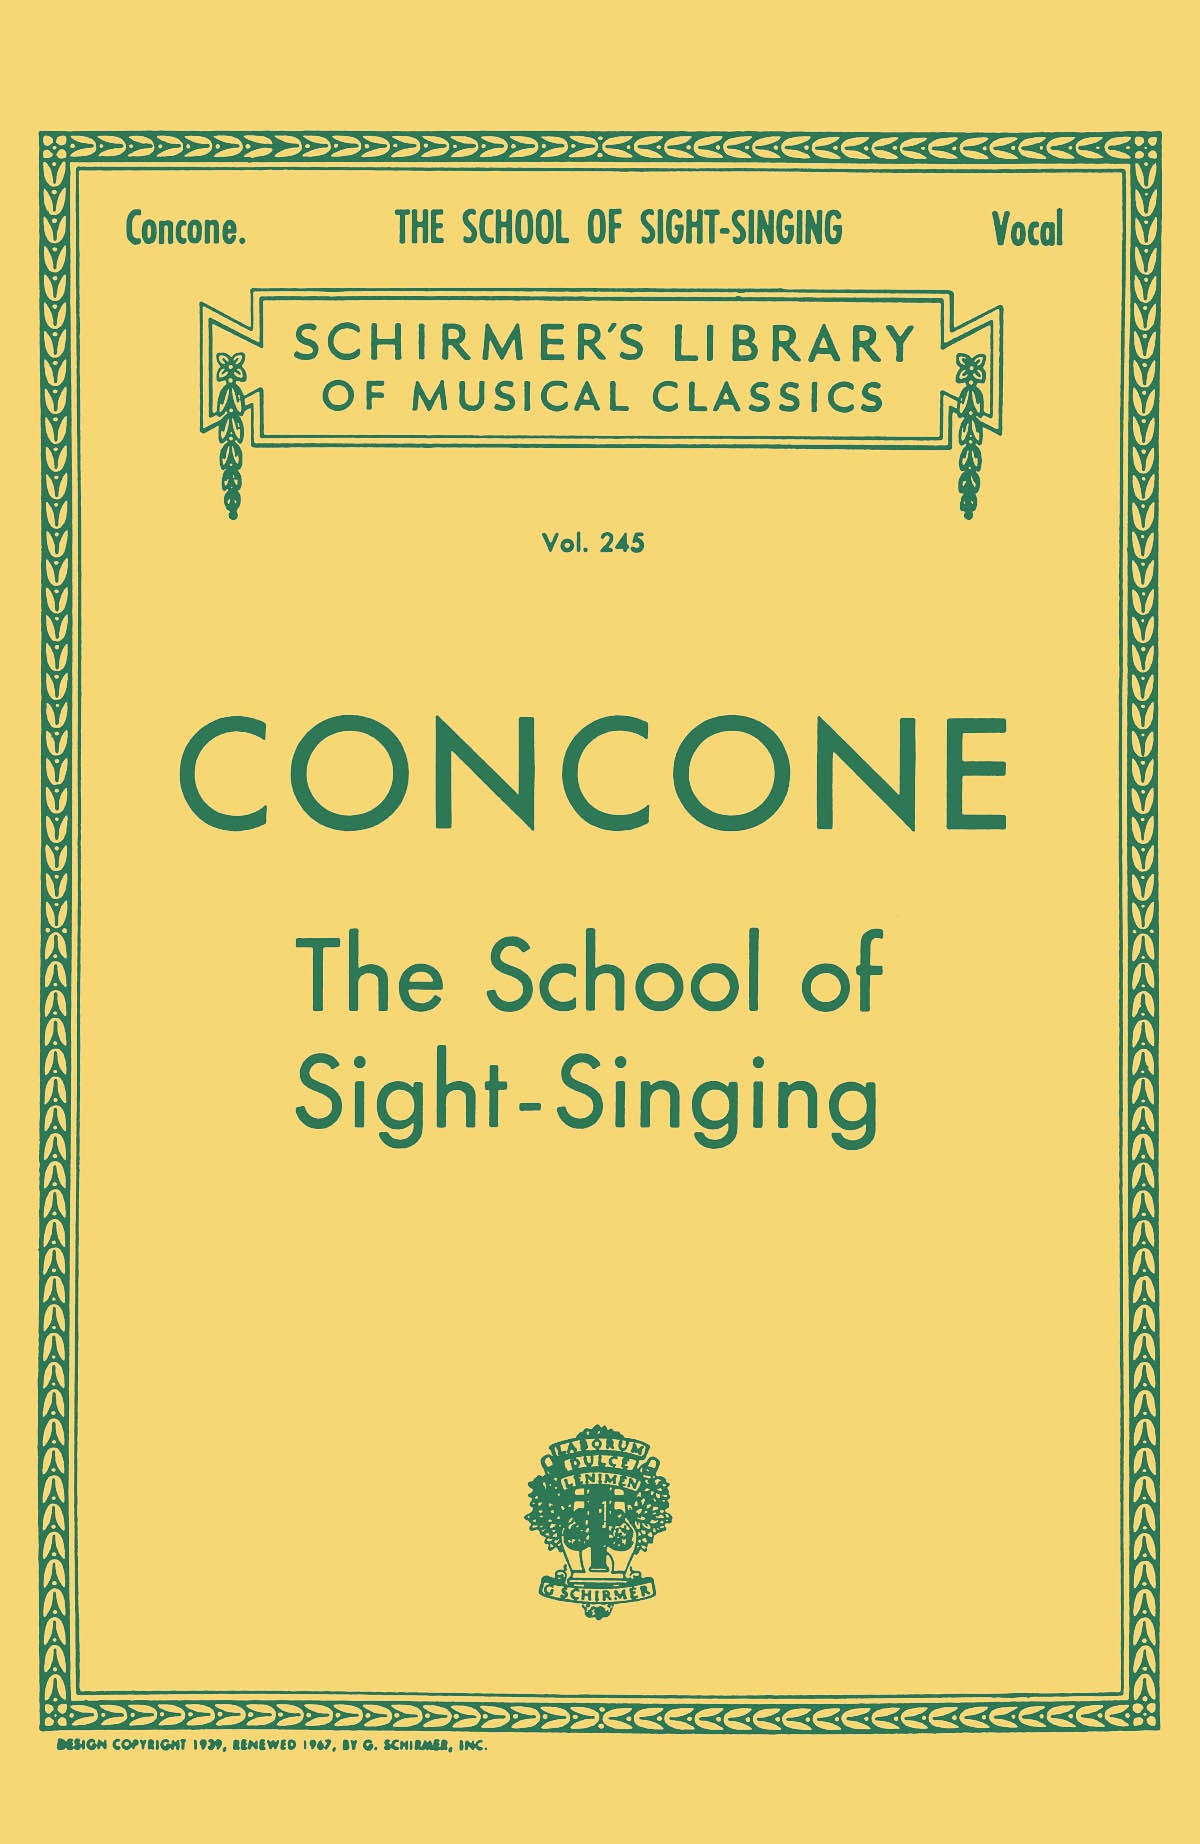 Concone School of Sight-Singing